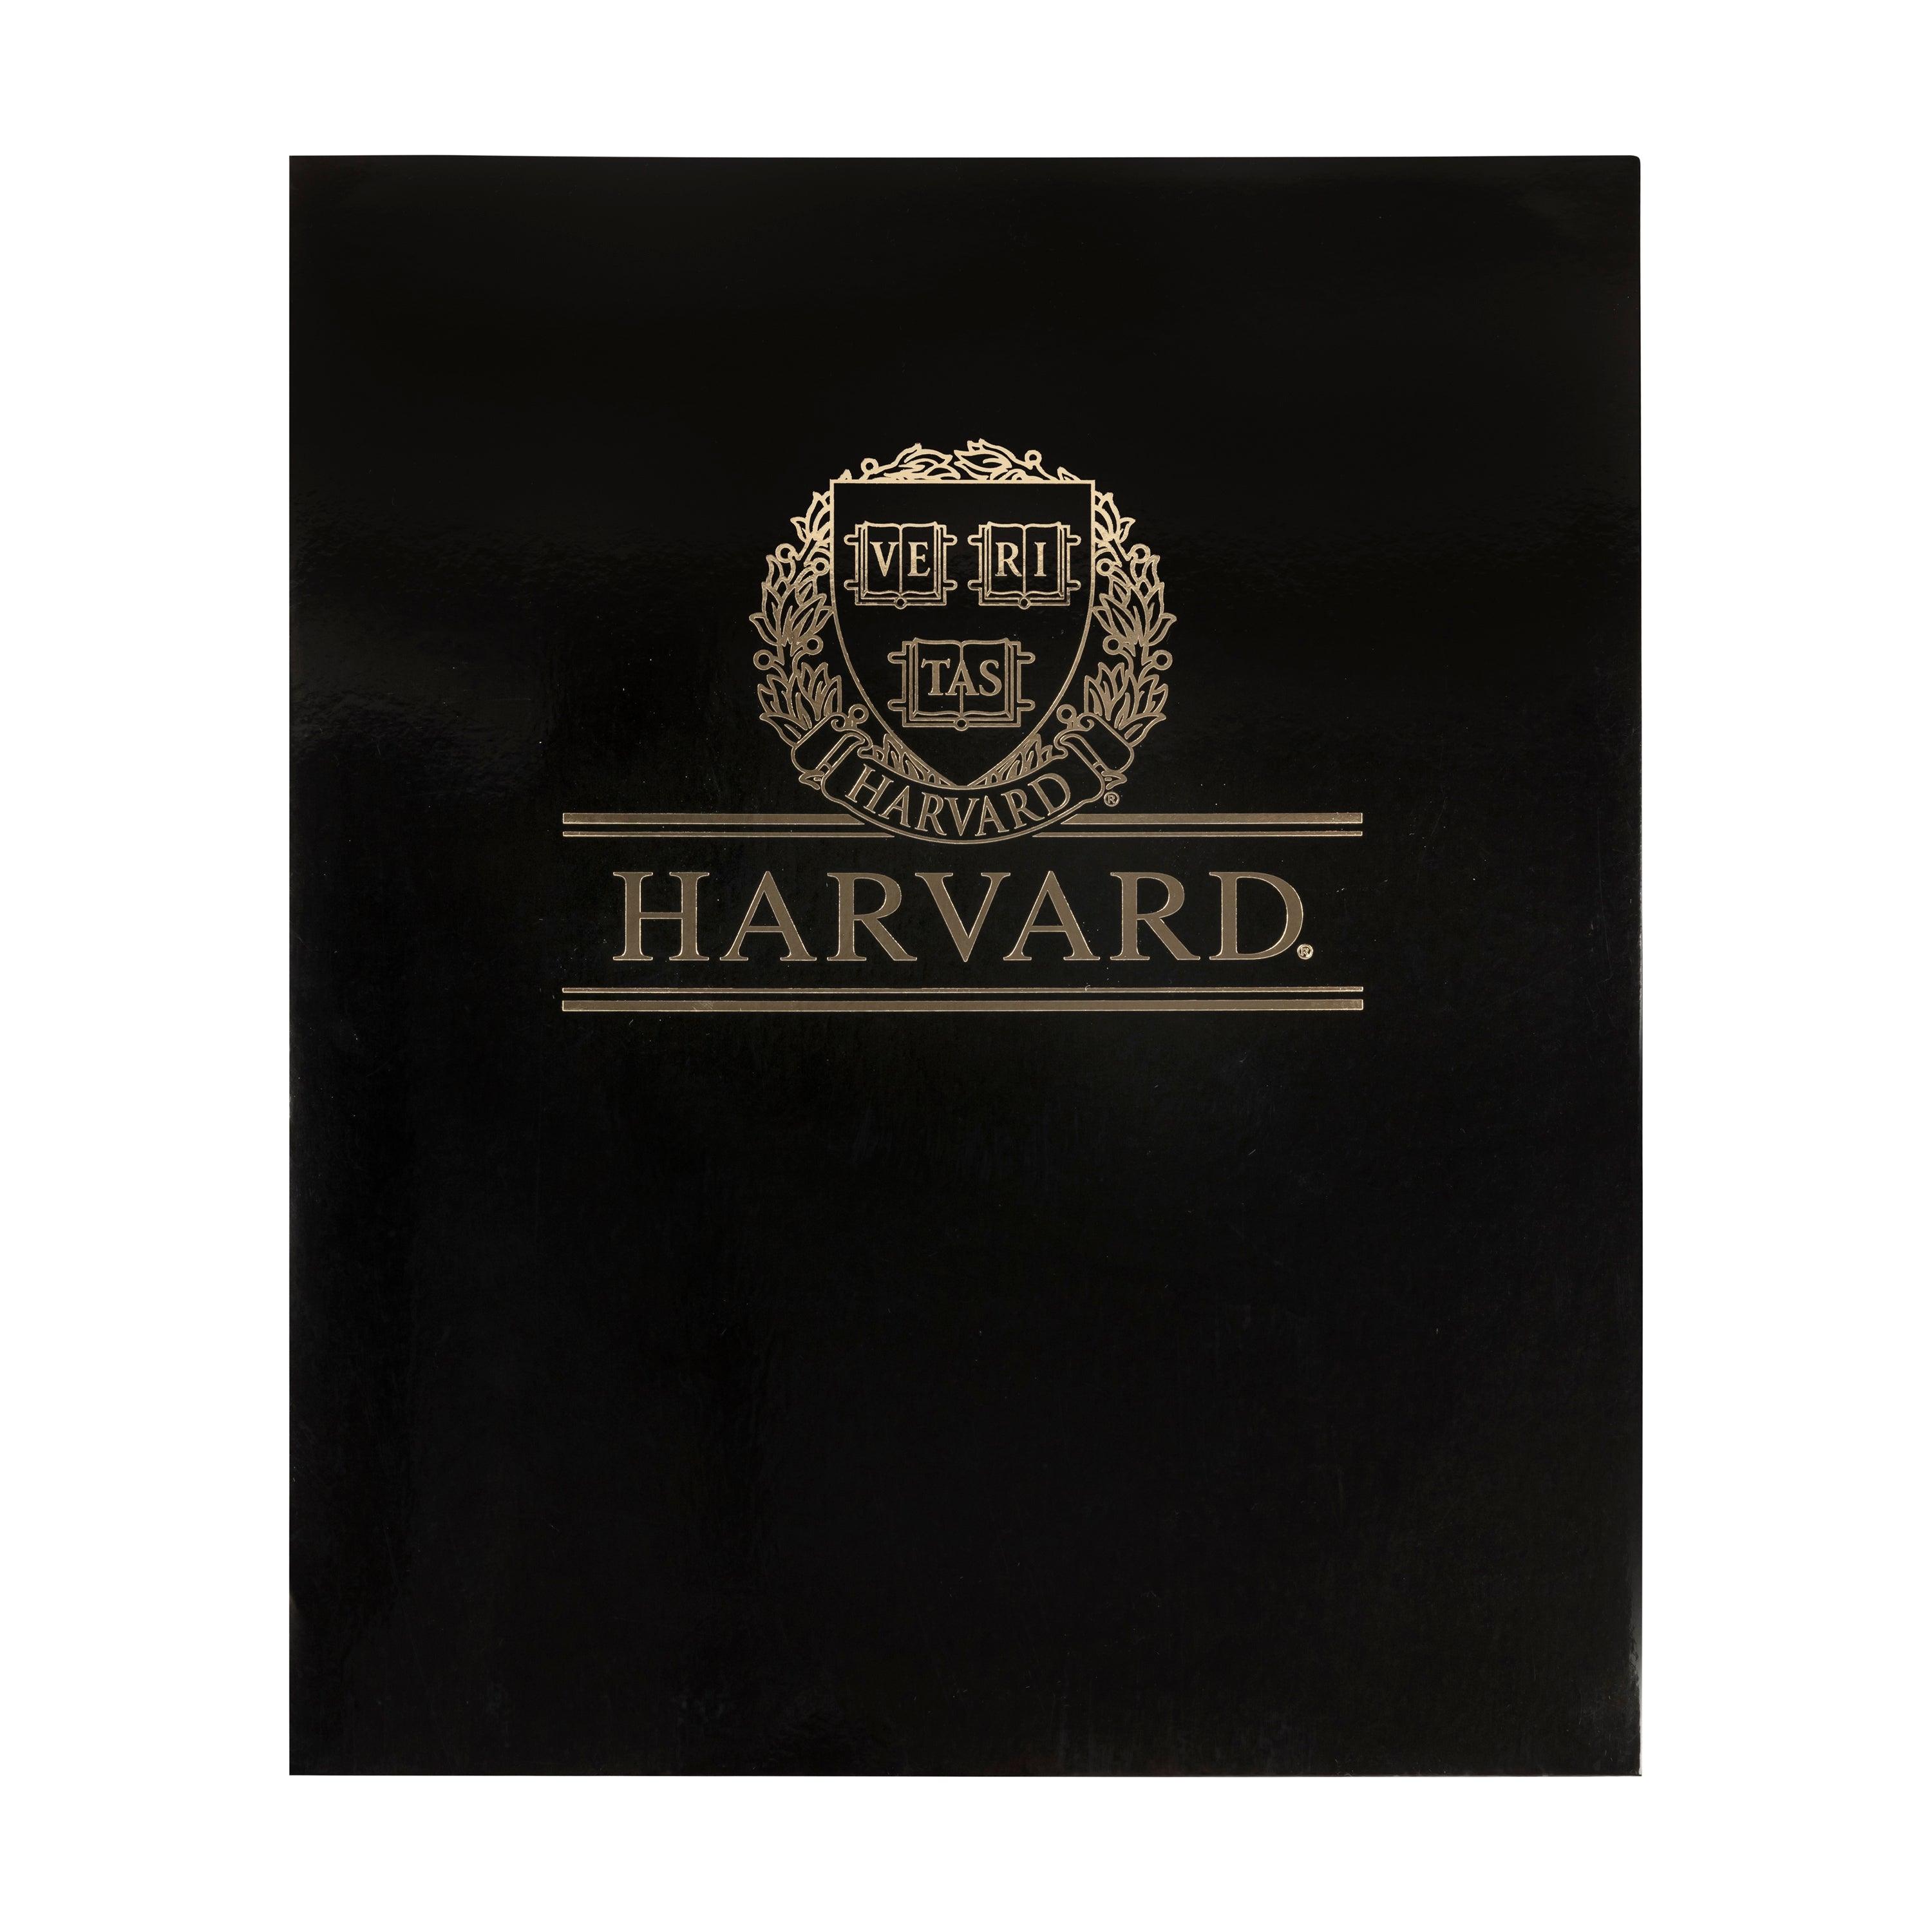 Harvard Folder Harvard Shop